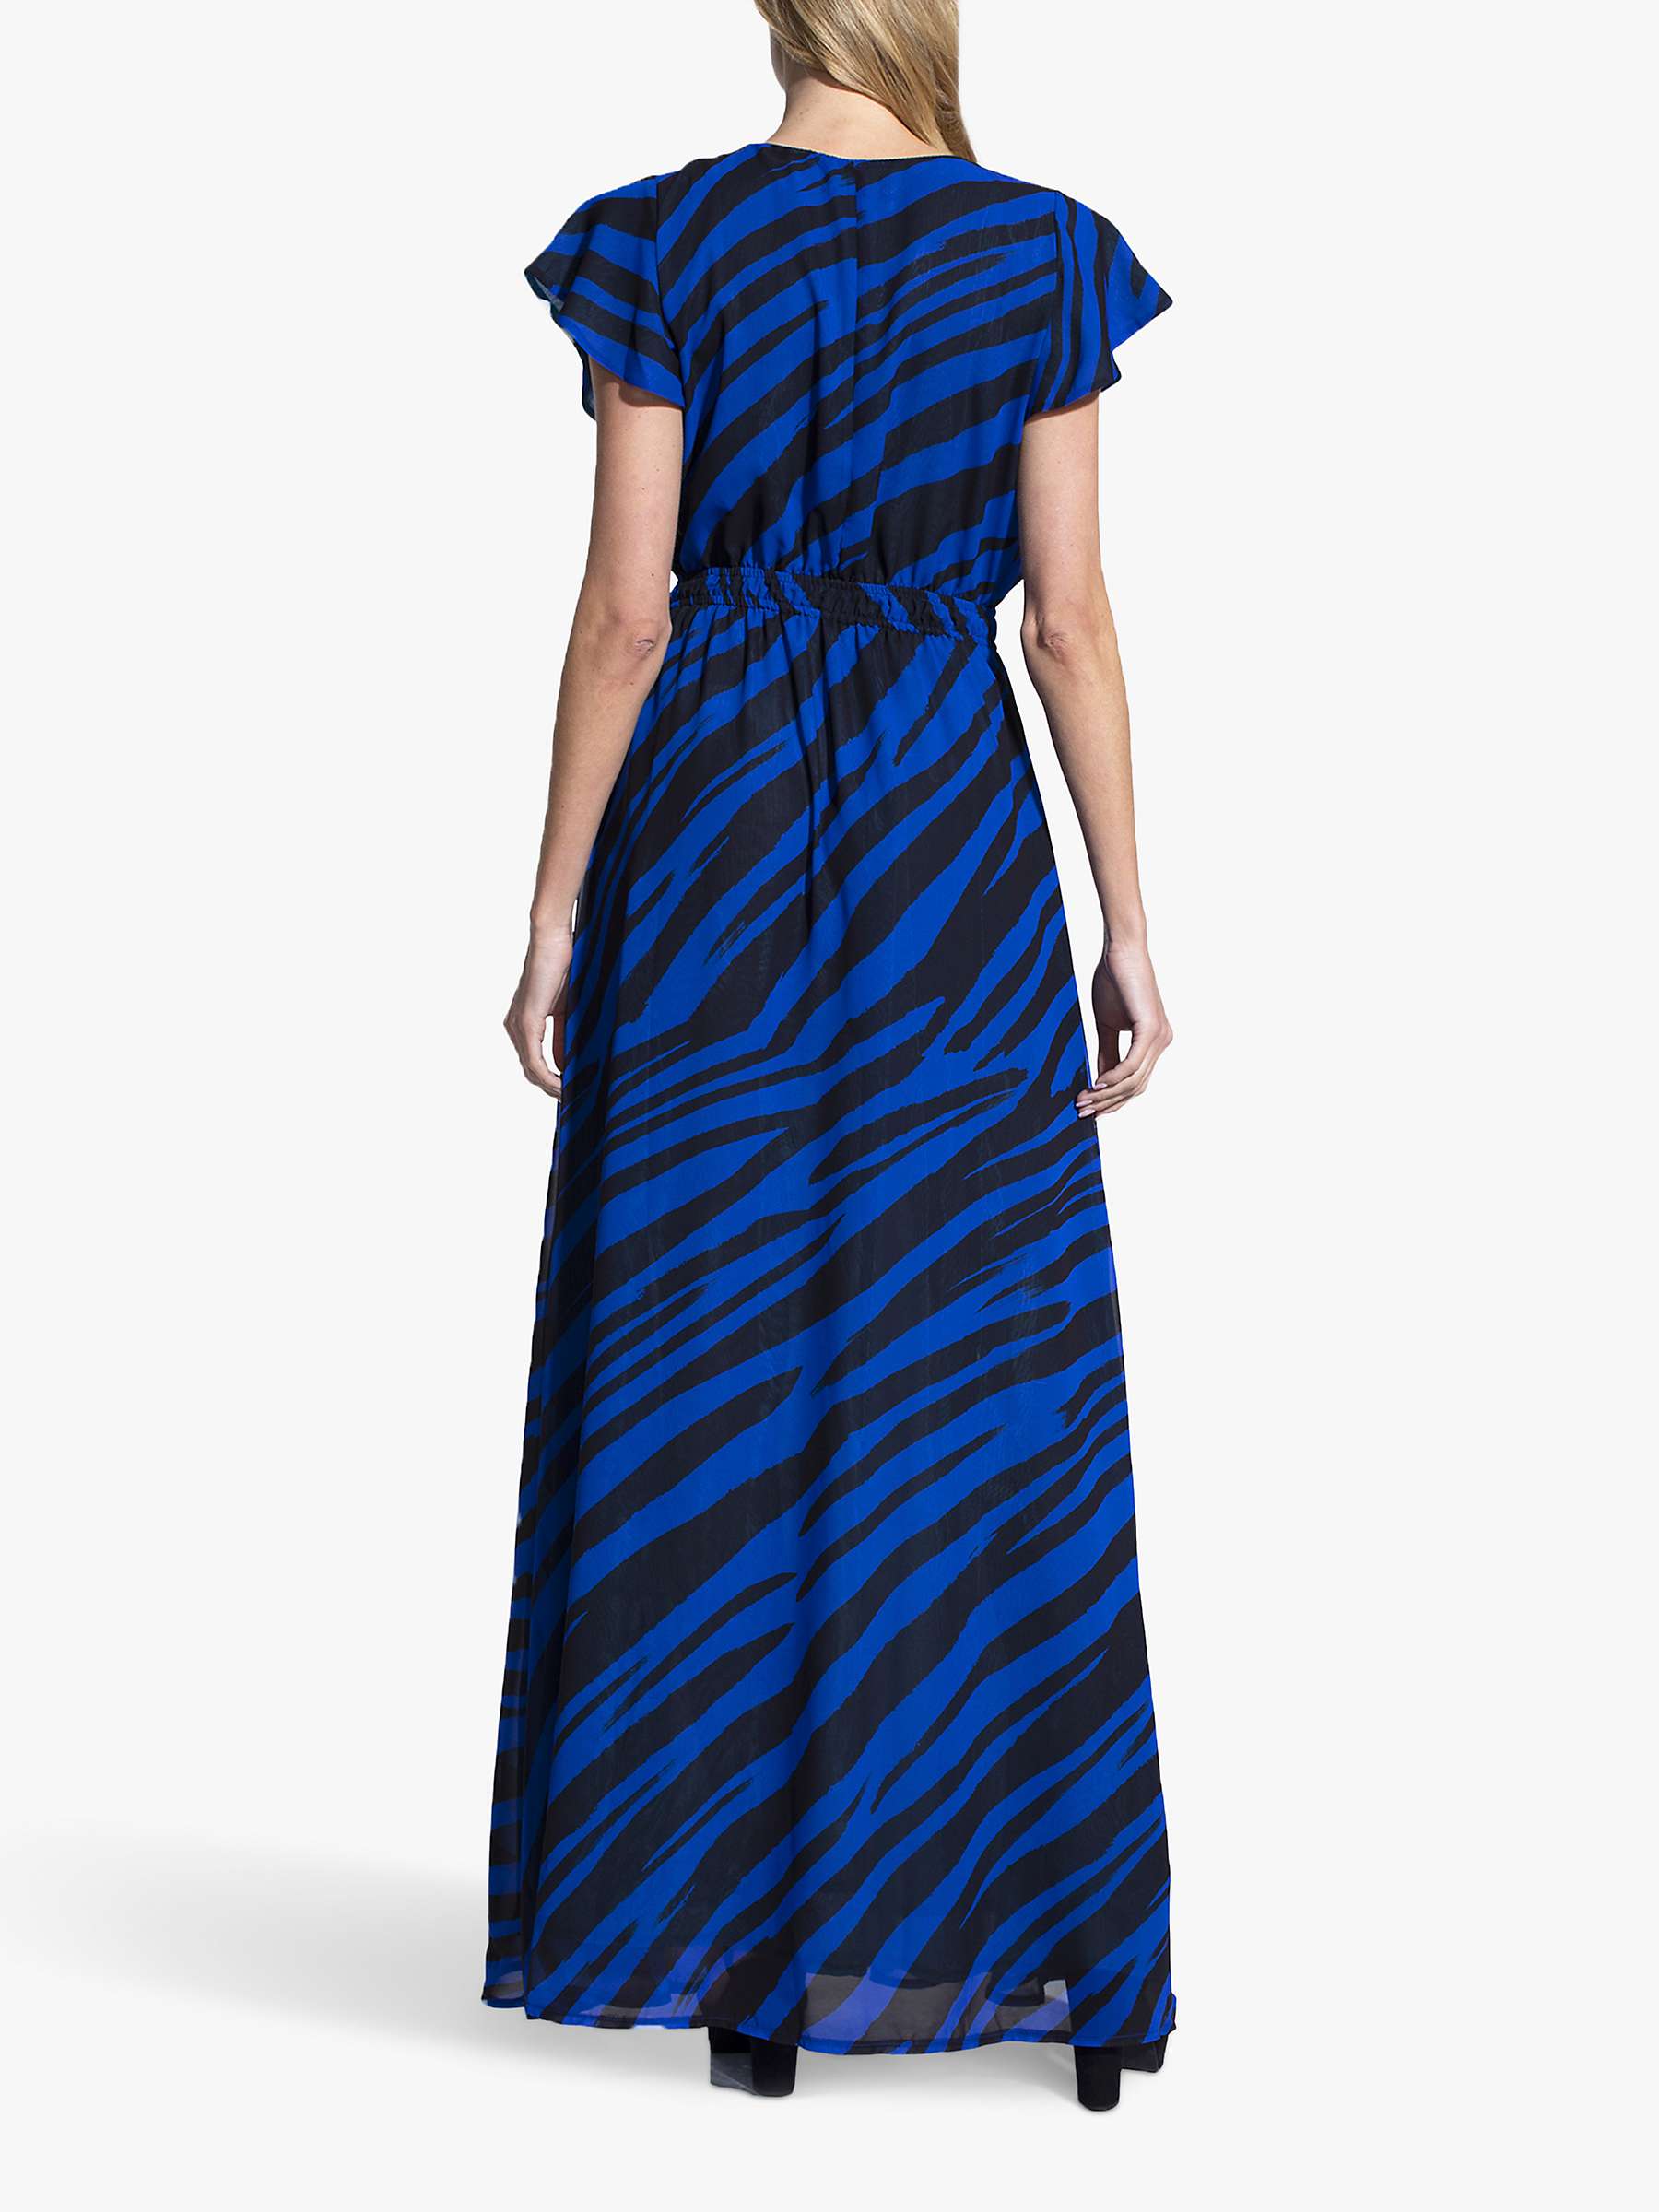 Buy HotSquash Zebra Print Wrap Top Maxi Dress, Blue/Black Online at johnlewis.com